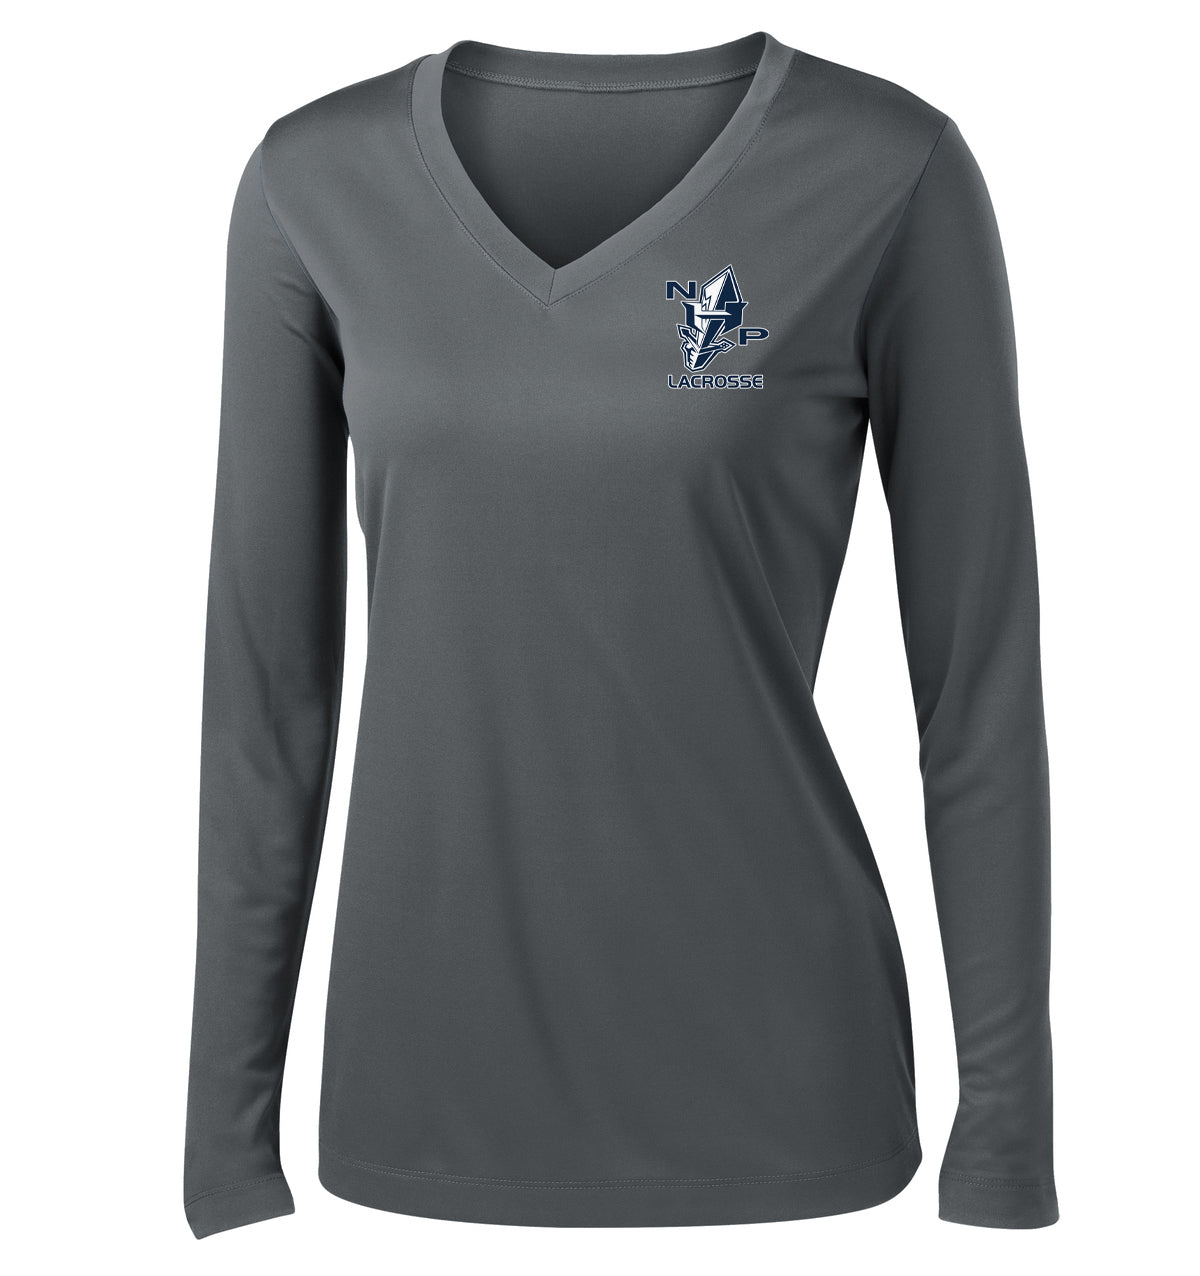 New Hyde Park HS Lacrosse Women's Long Sleeve Performance Shirt